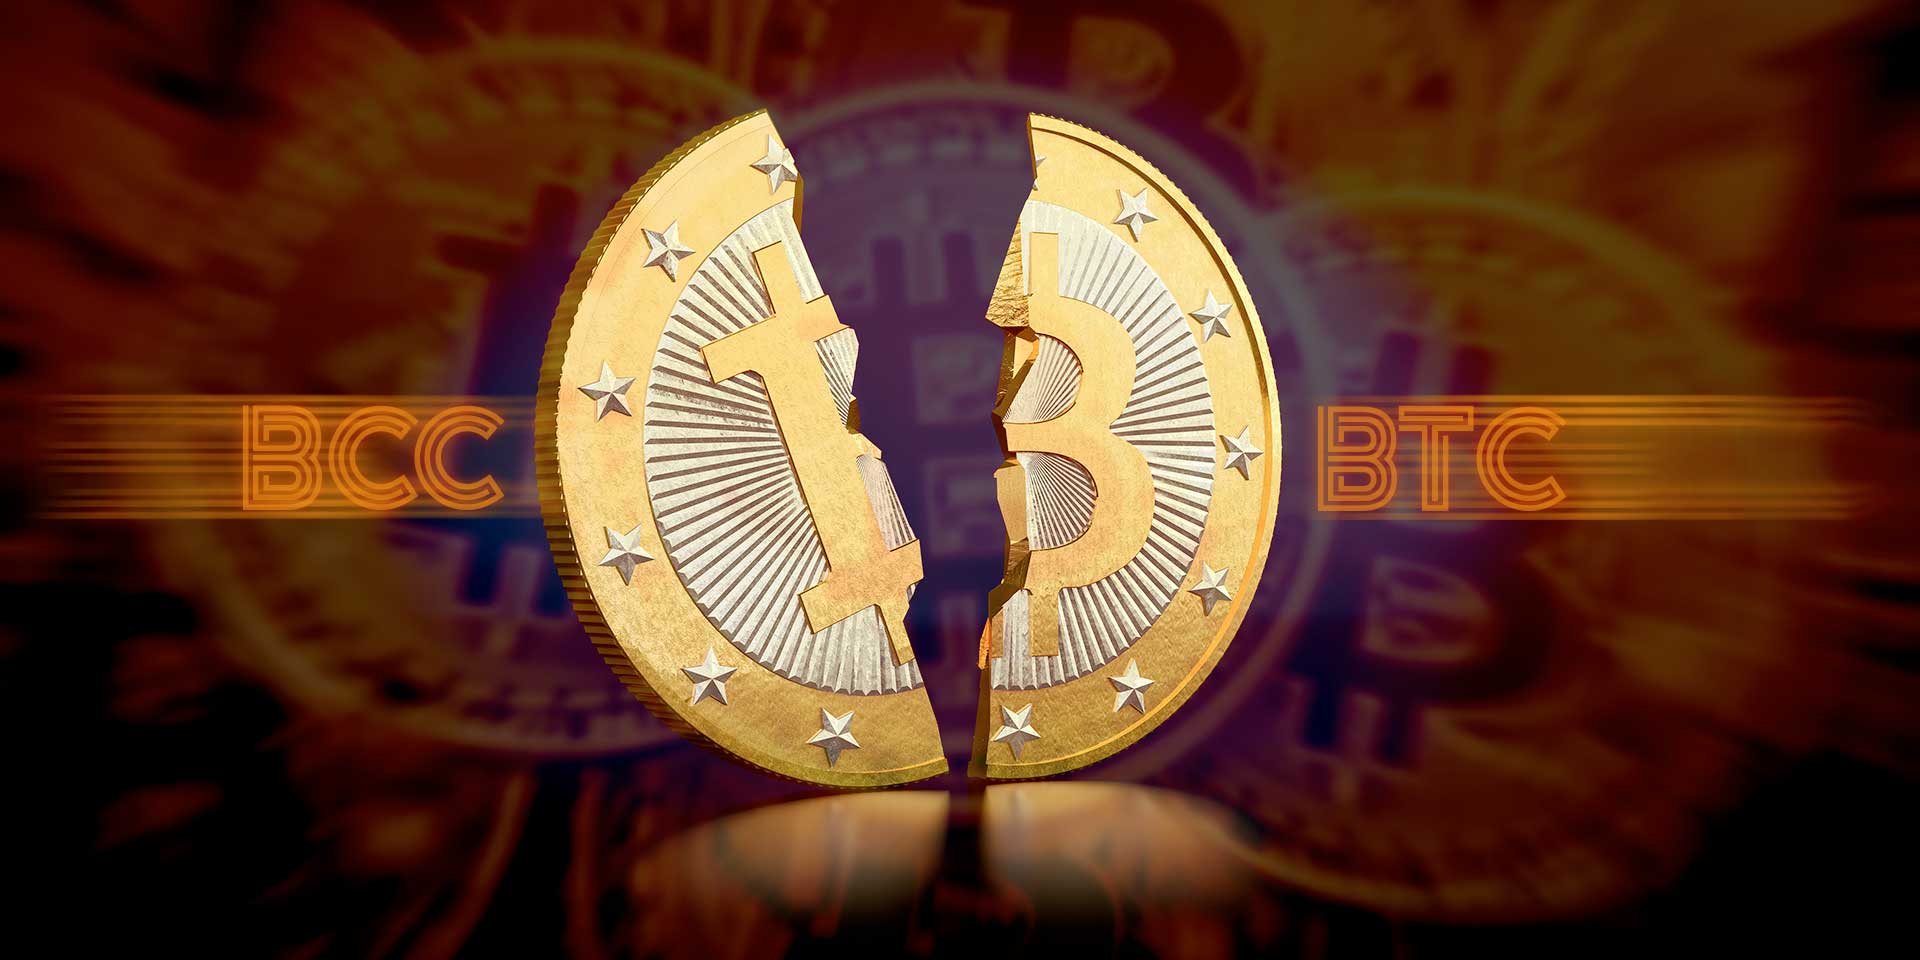 Btc bcc split wealthiest bitcoin owners